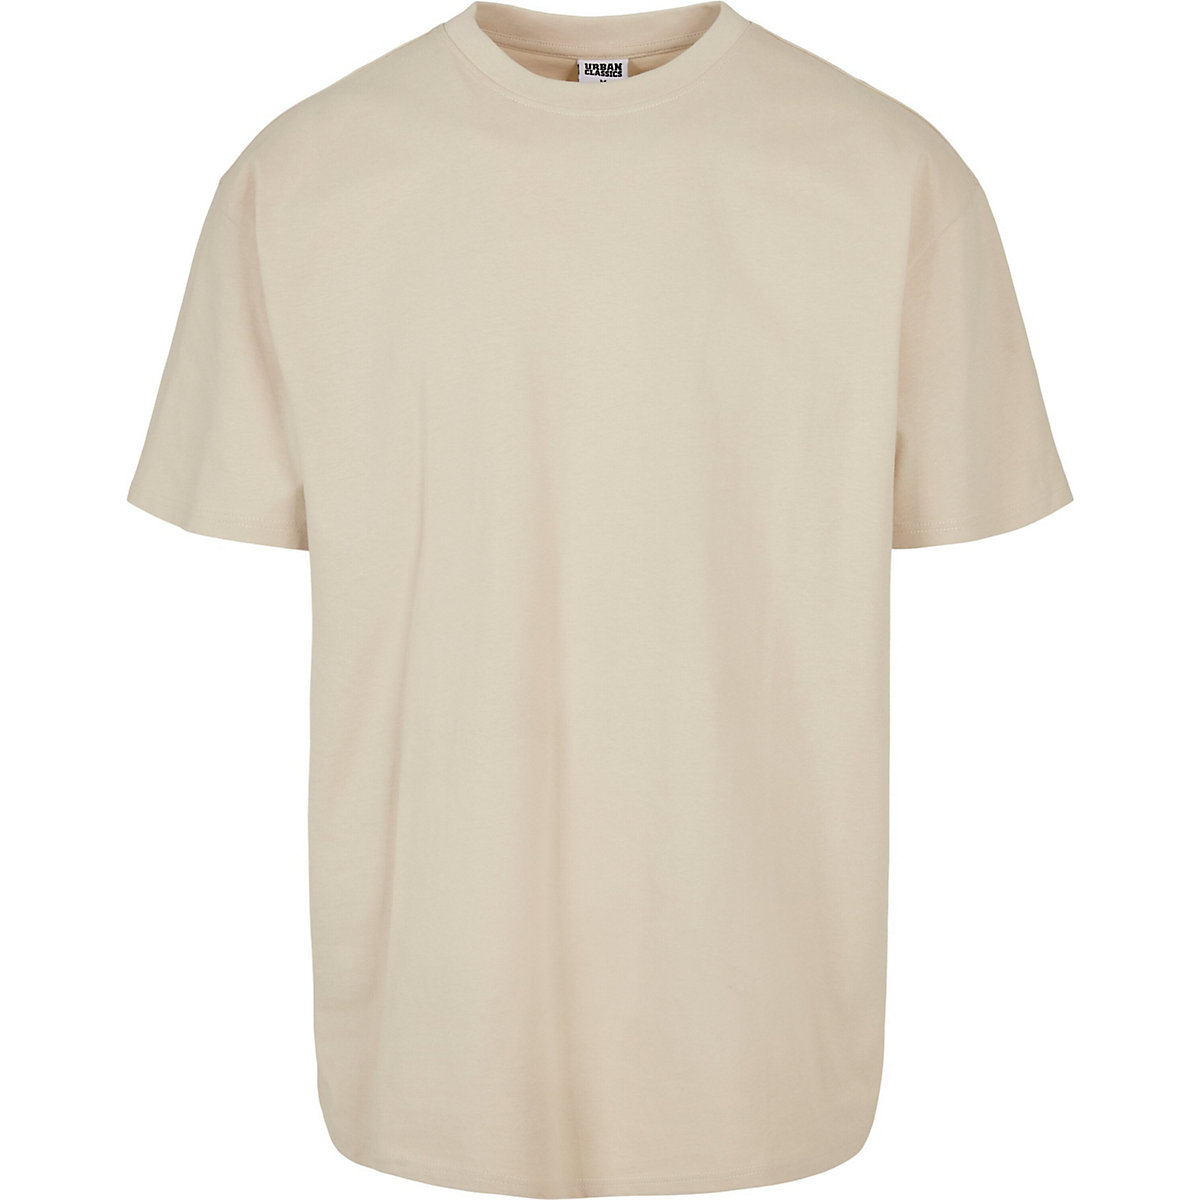 Urban Classics Shirt beige